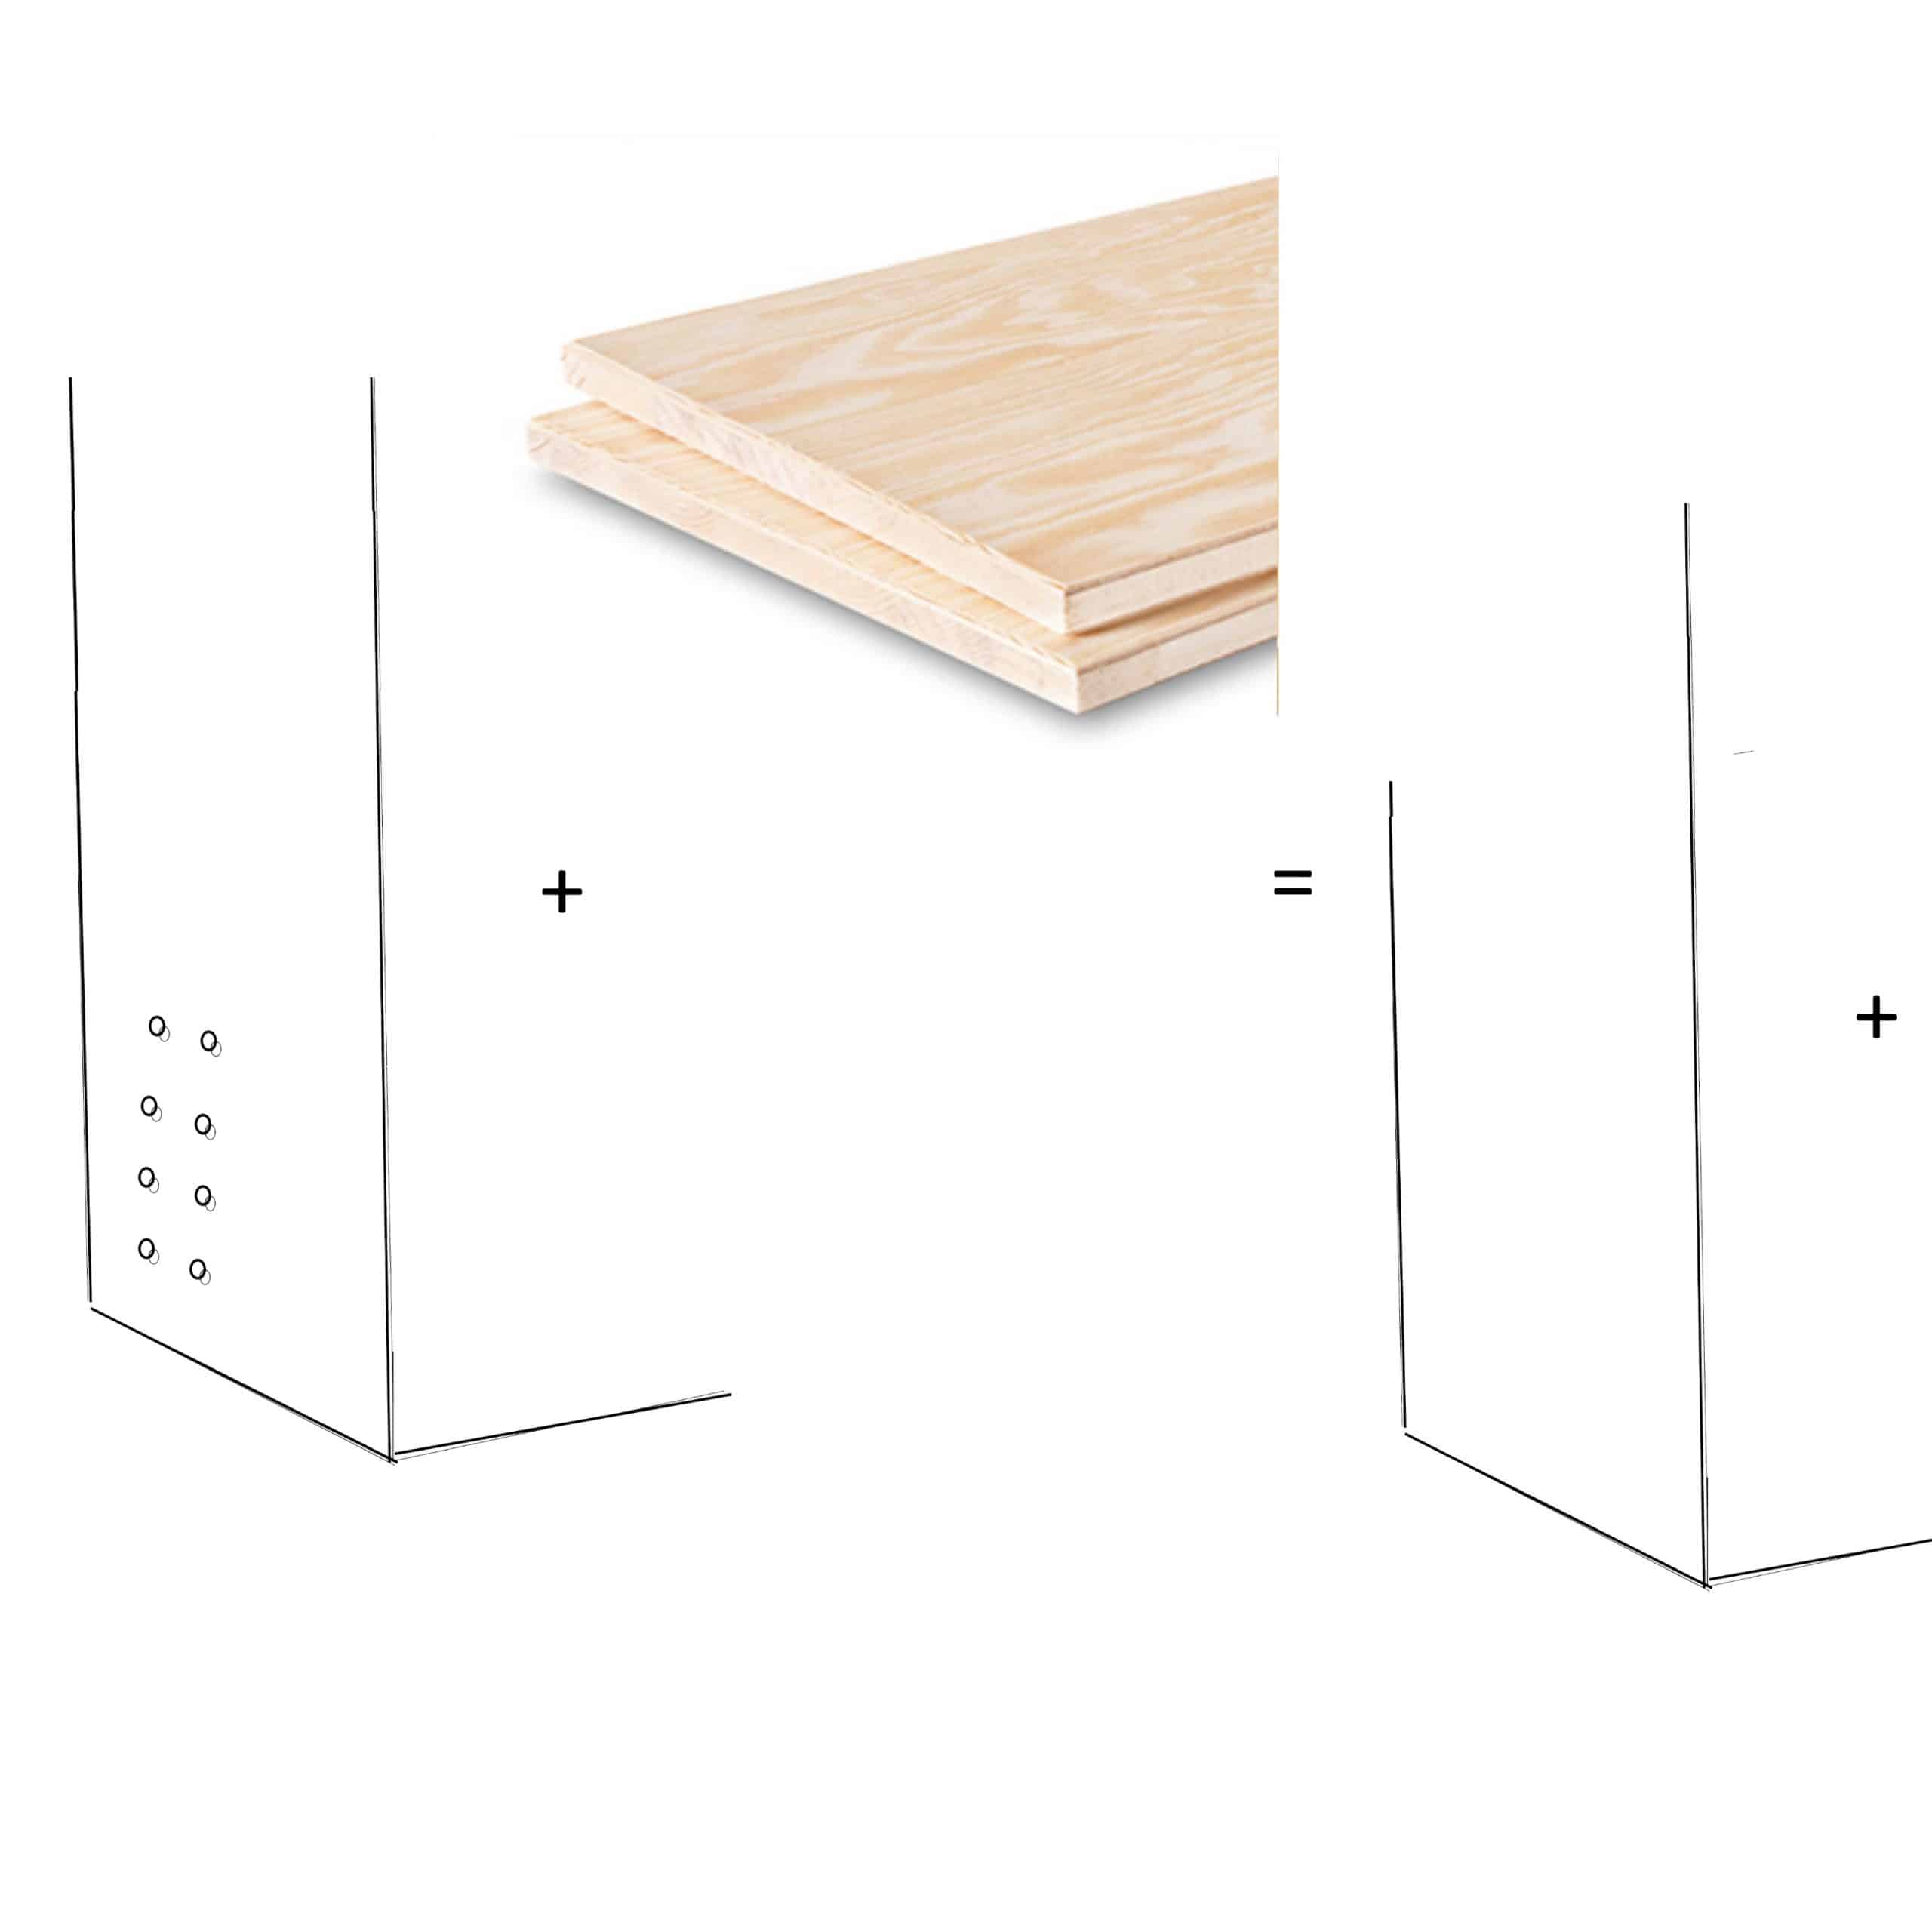 Side covers in pine veneered block board / Täcksidor i furulamell